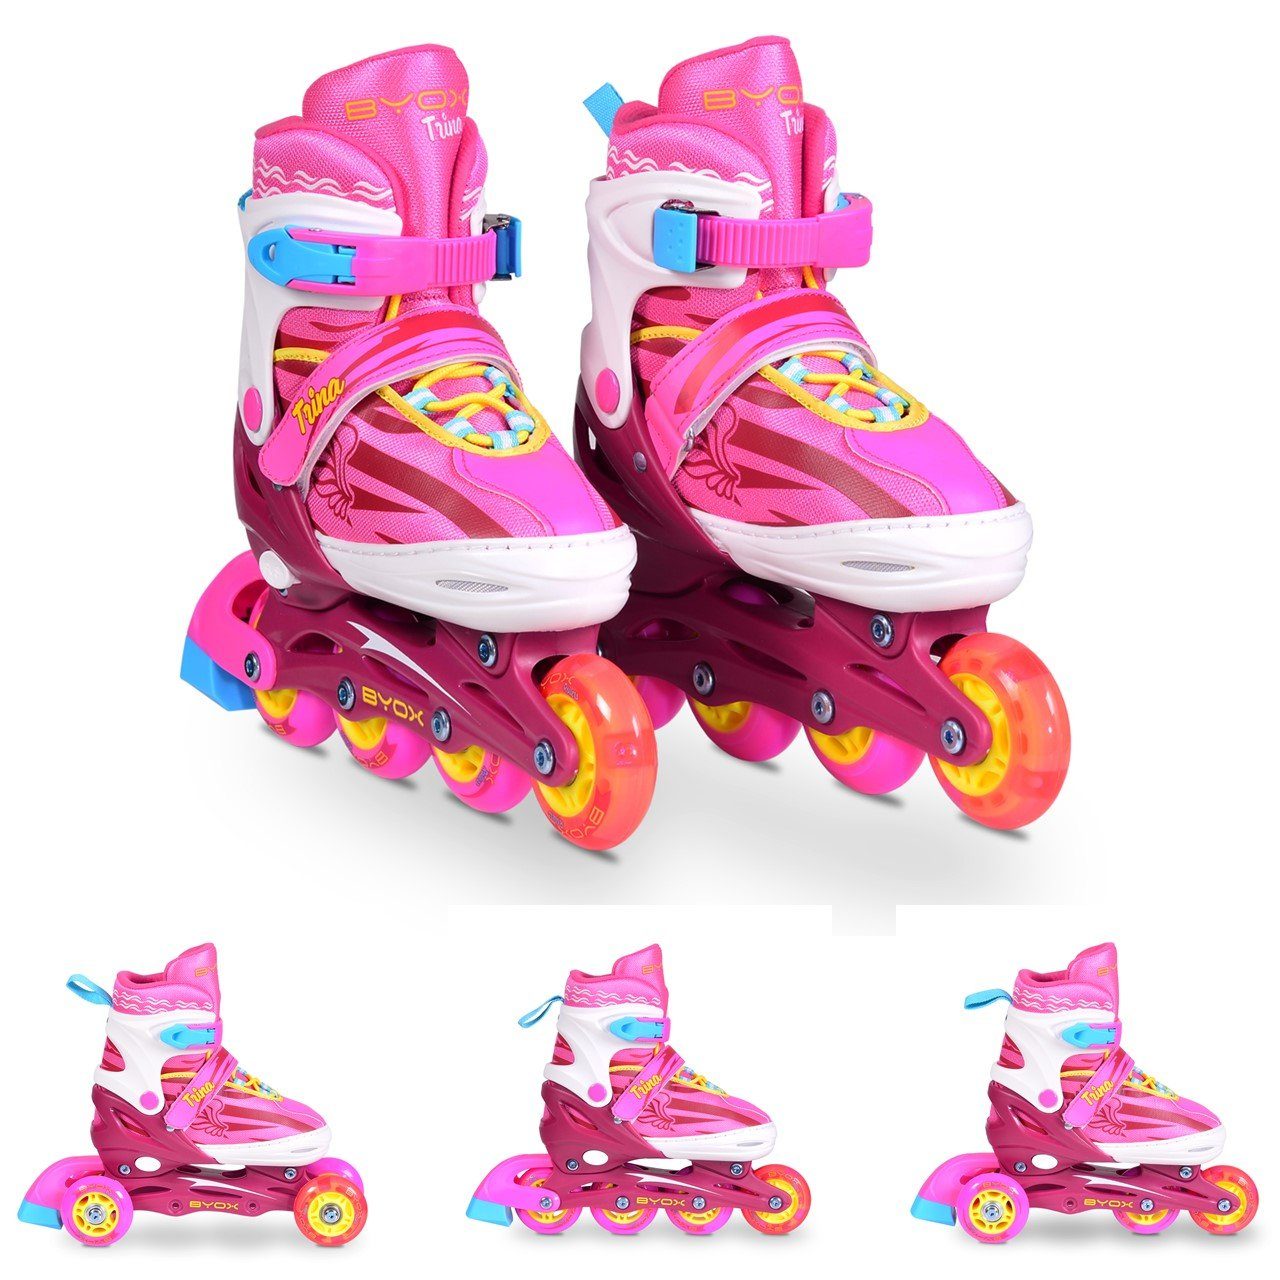 Inliner verstellbar Inline Skates Rollschuh Kinder/Erwachsene Rollerskates LED 